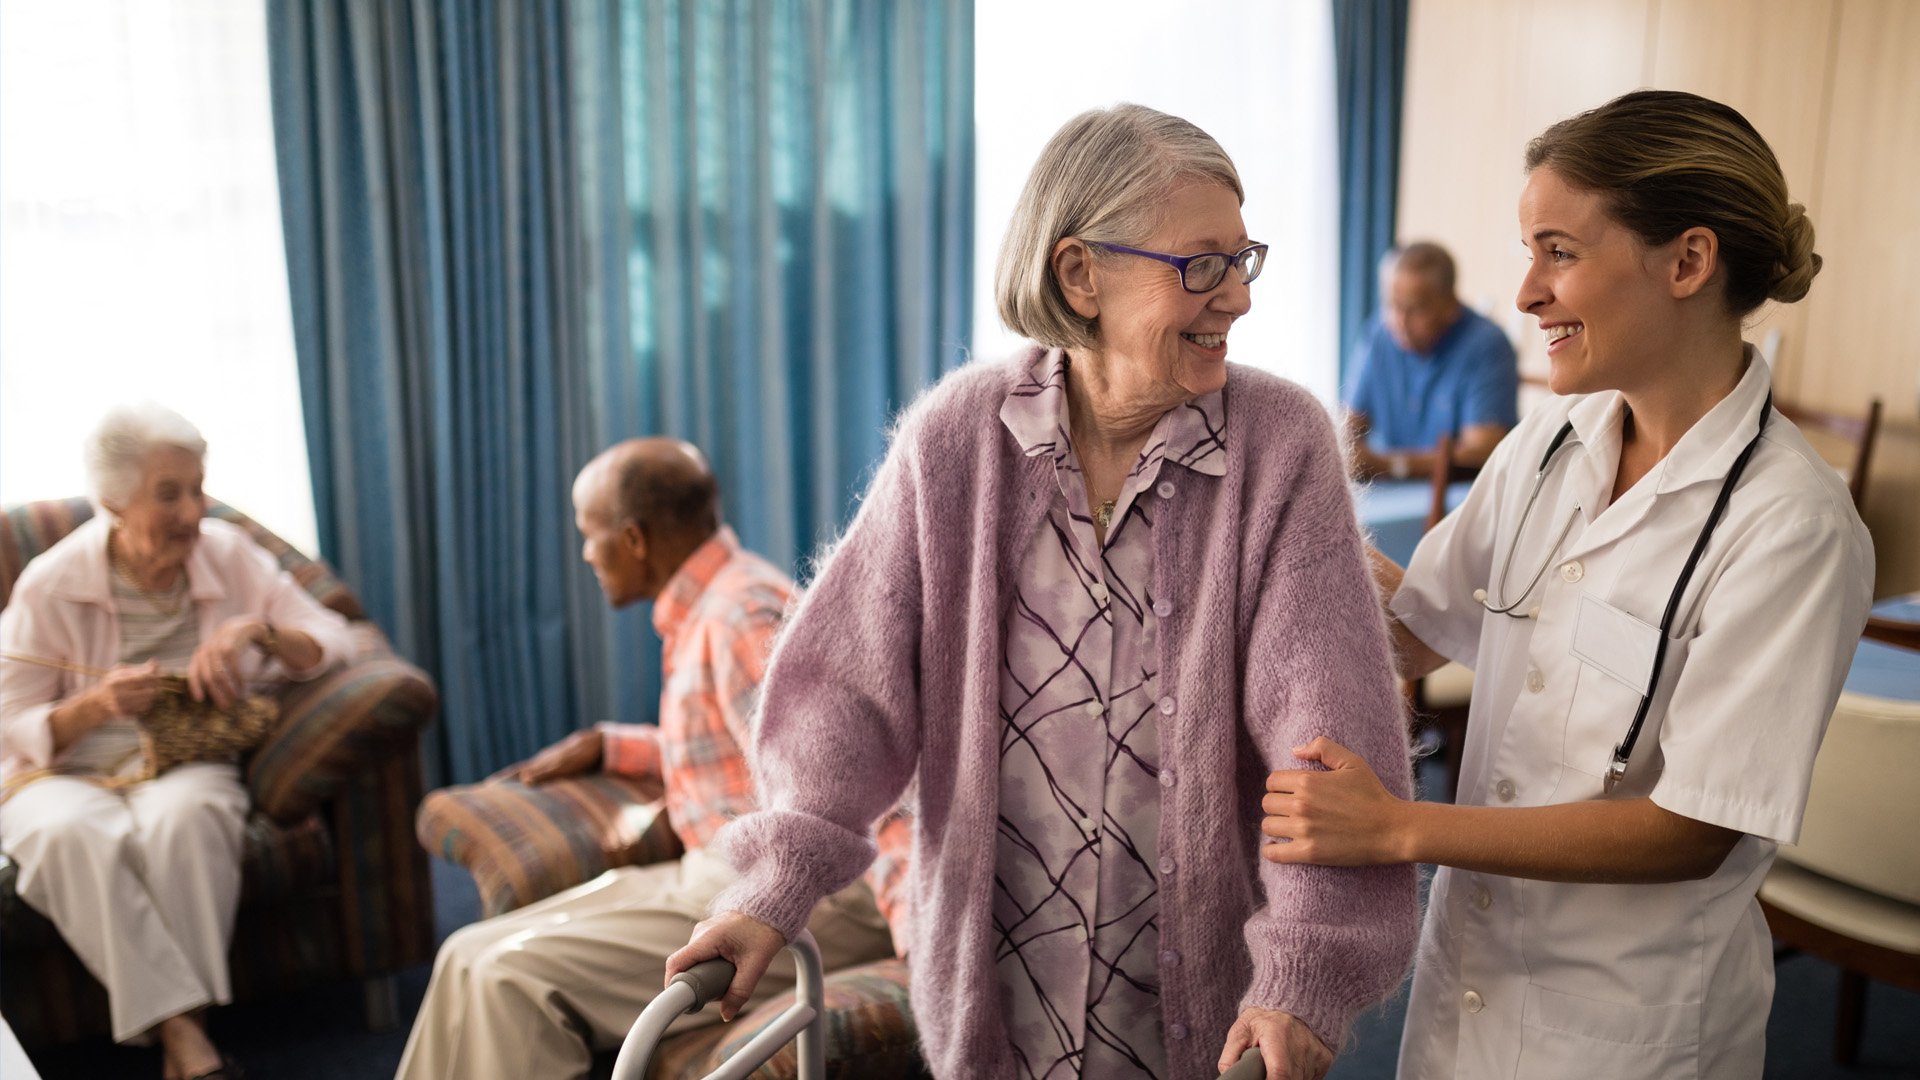 Nursing home nurse assists elderly woman